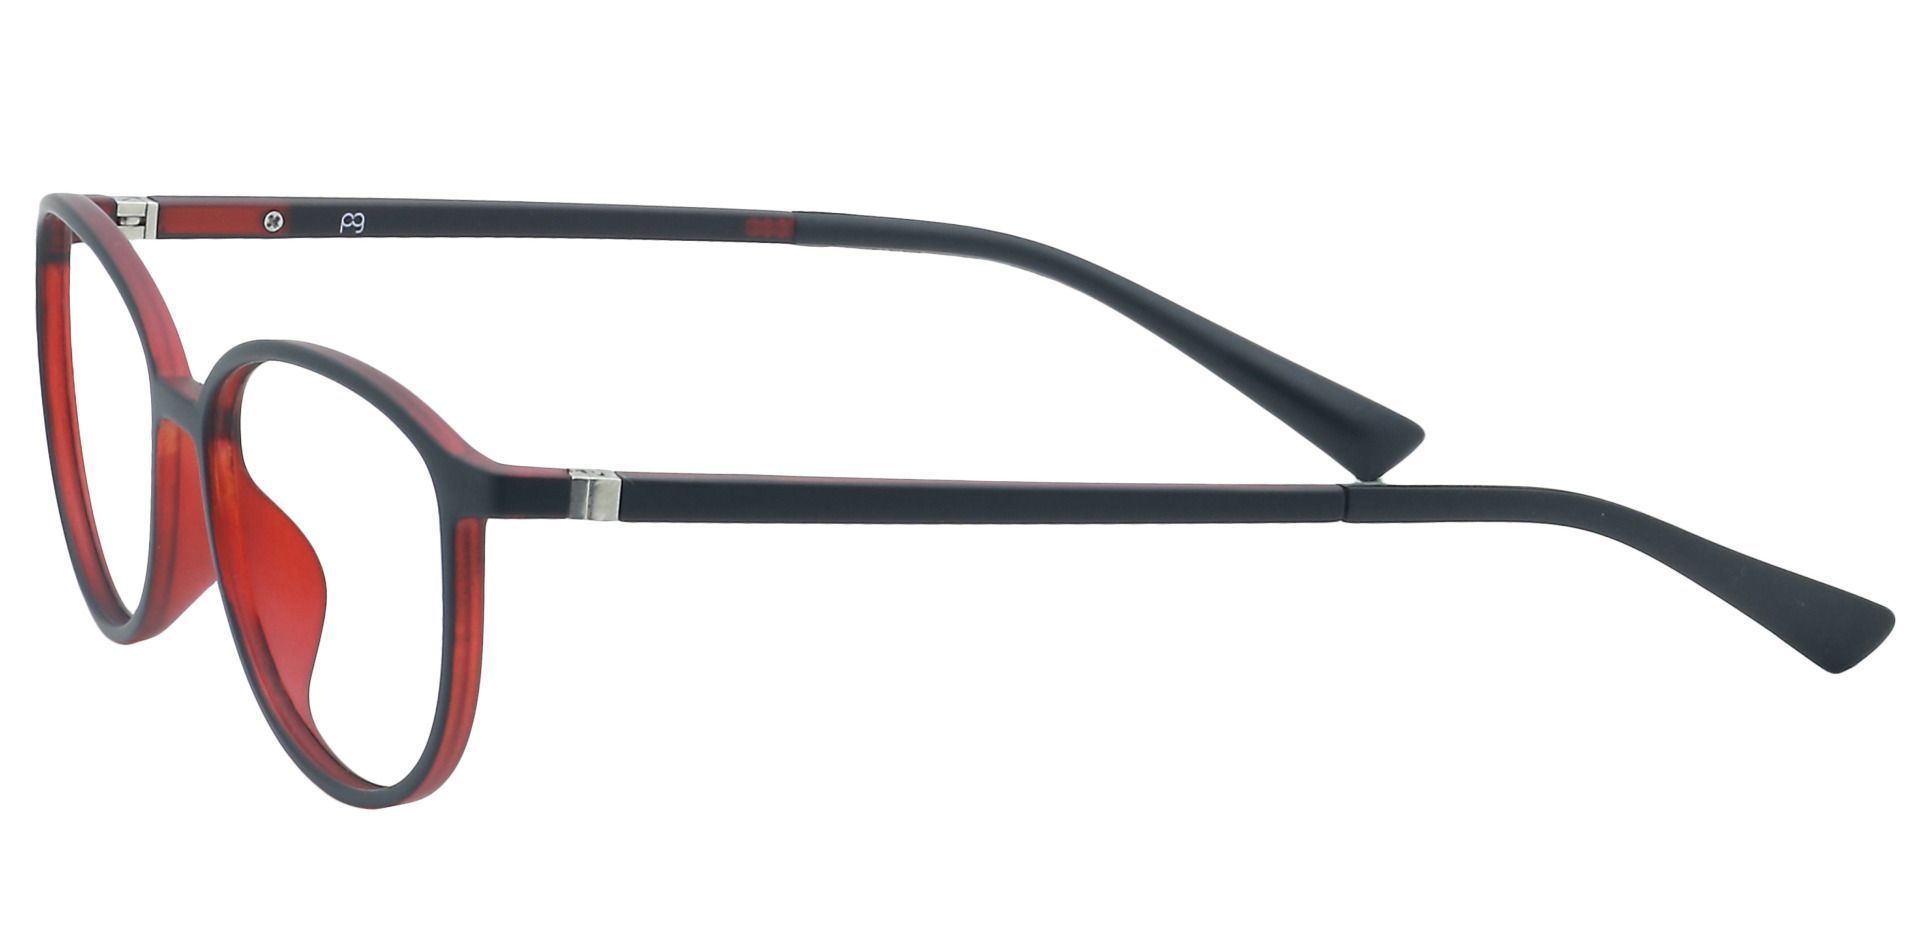 Melbourne Oval Lined Bifocal Glasses - Red